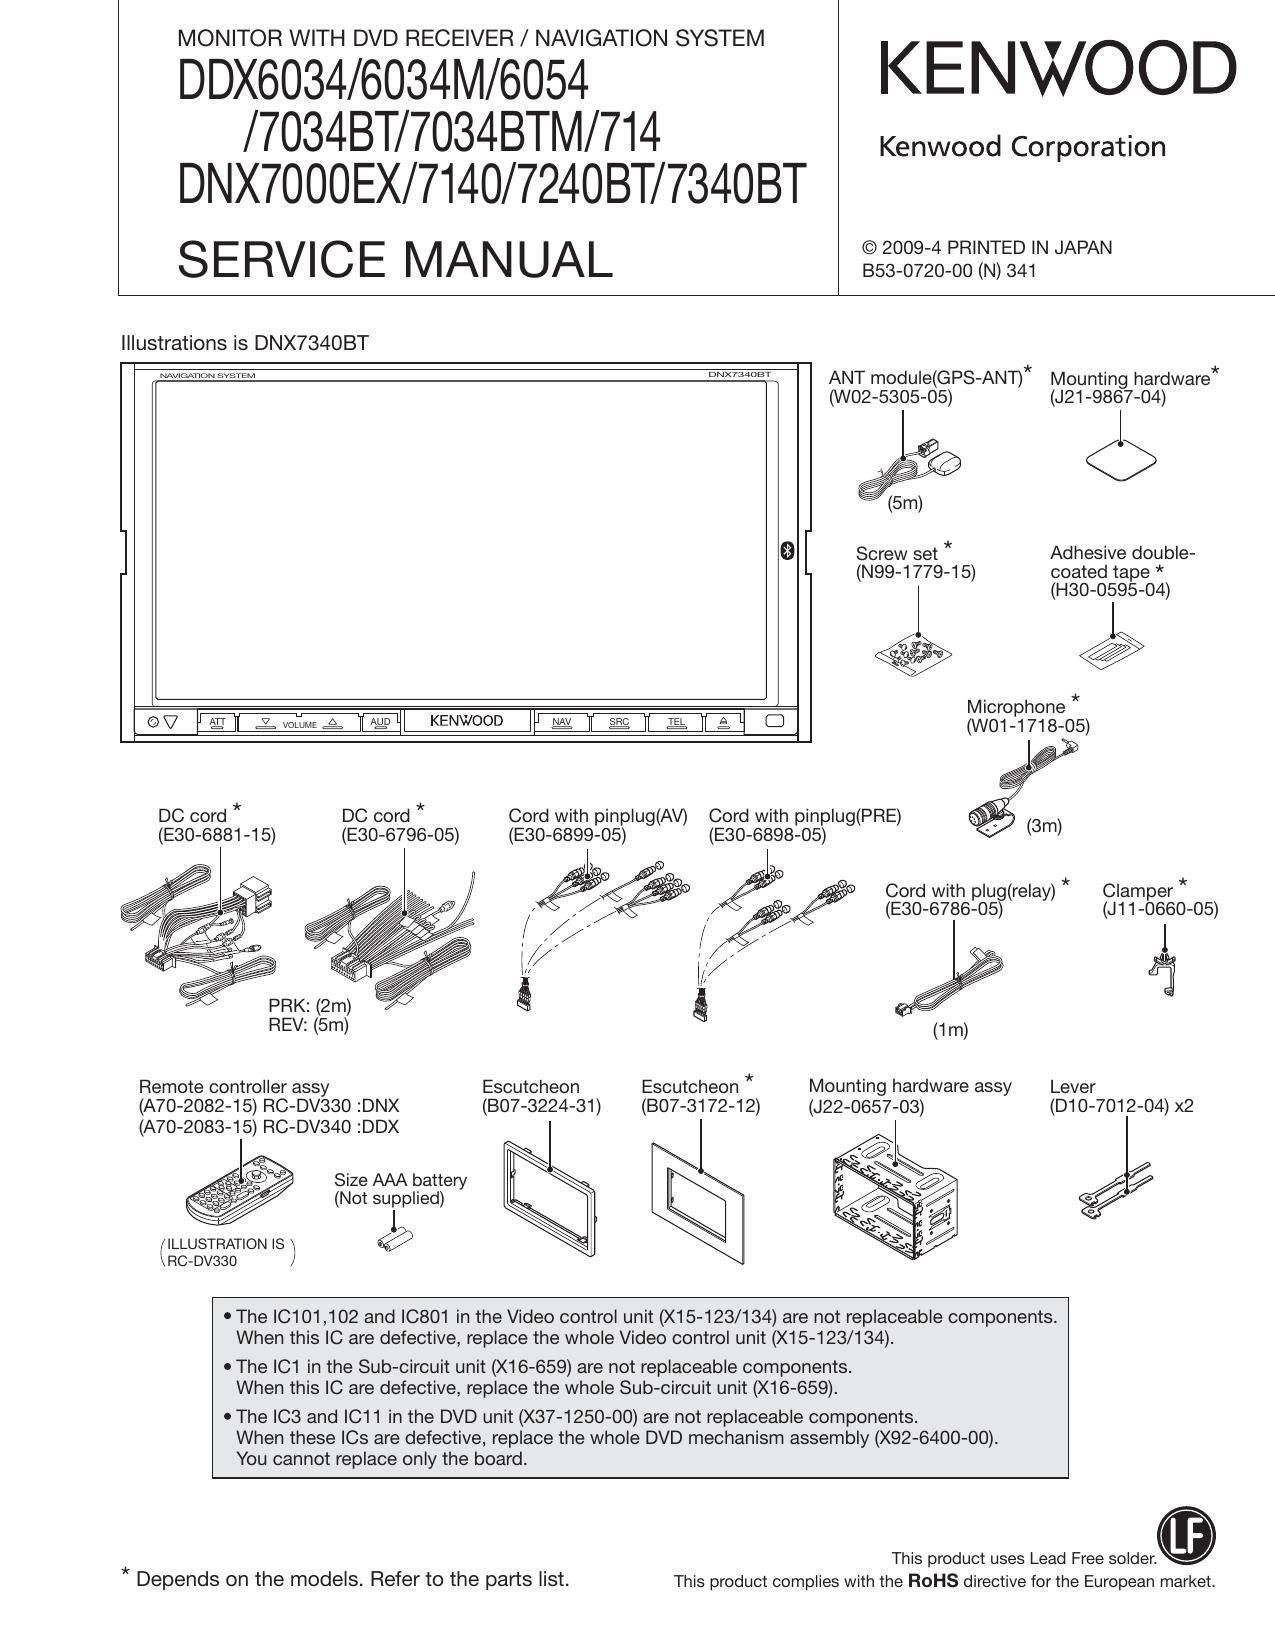 Kenwood DDX 6034 M HU Service Manual